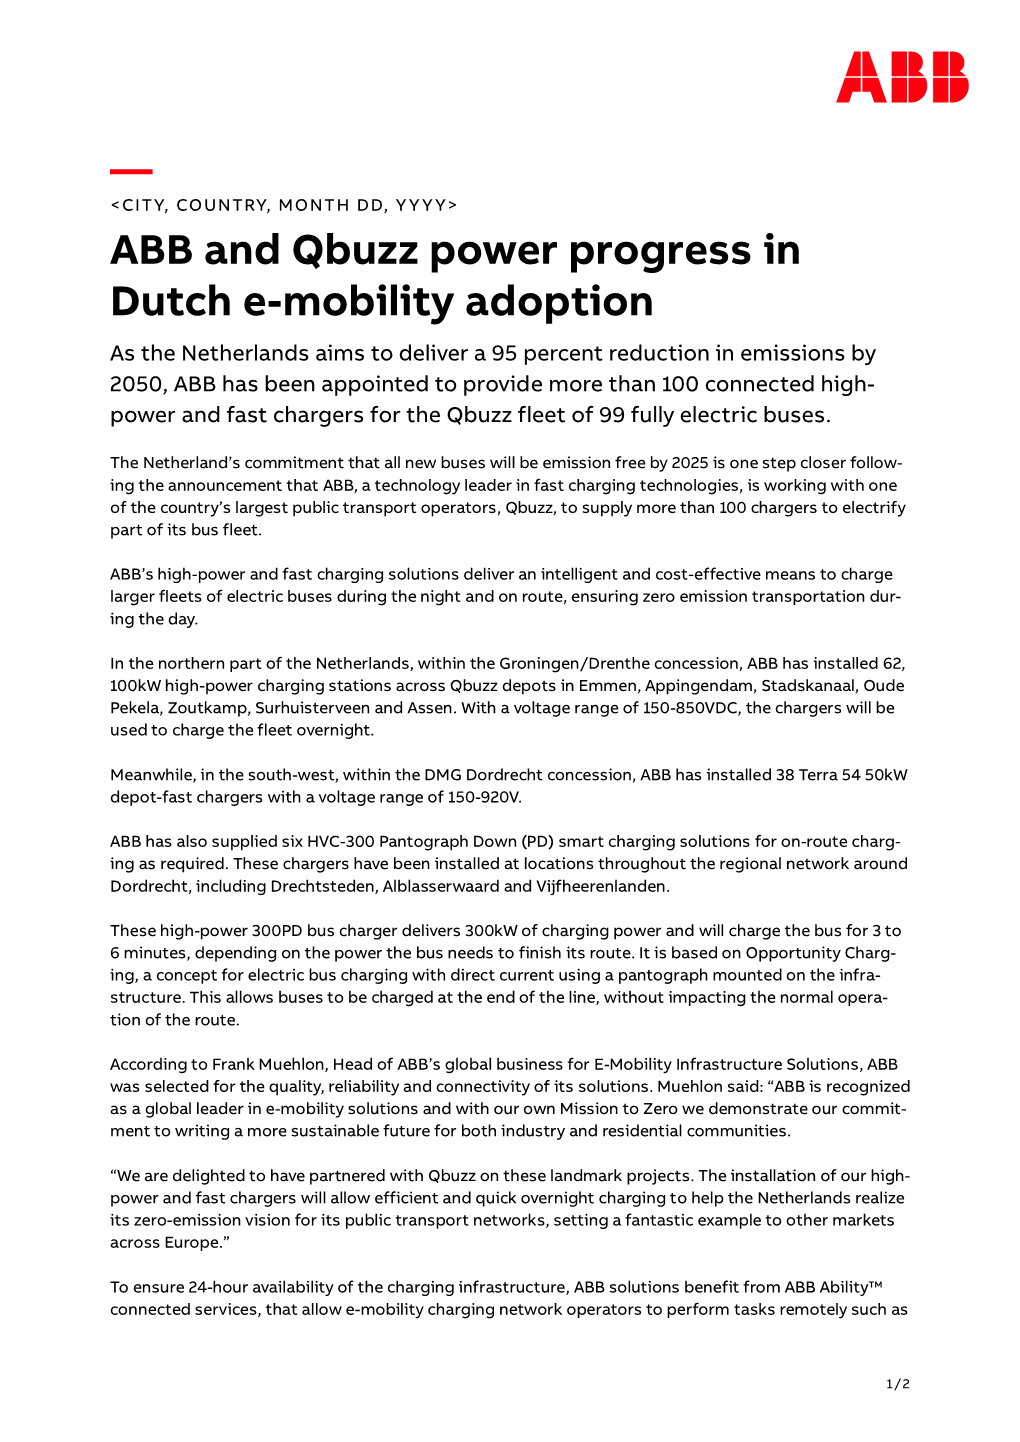 ABB and Qbuzz Power Progress in Dutch E-Mobility Adoption